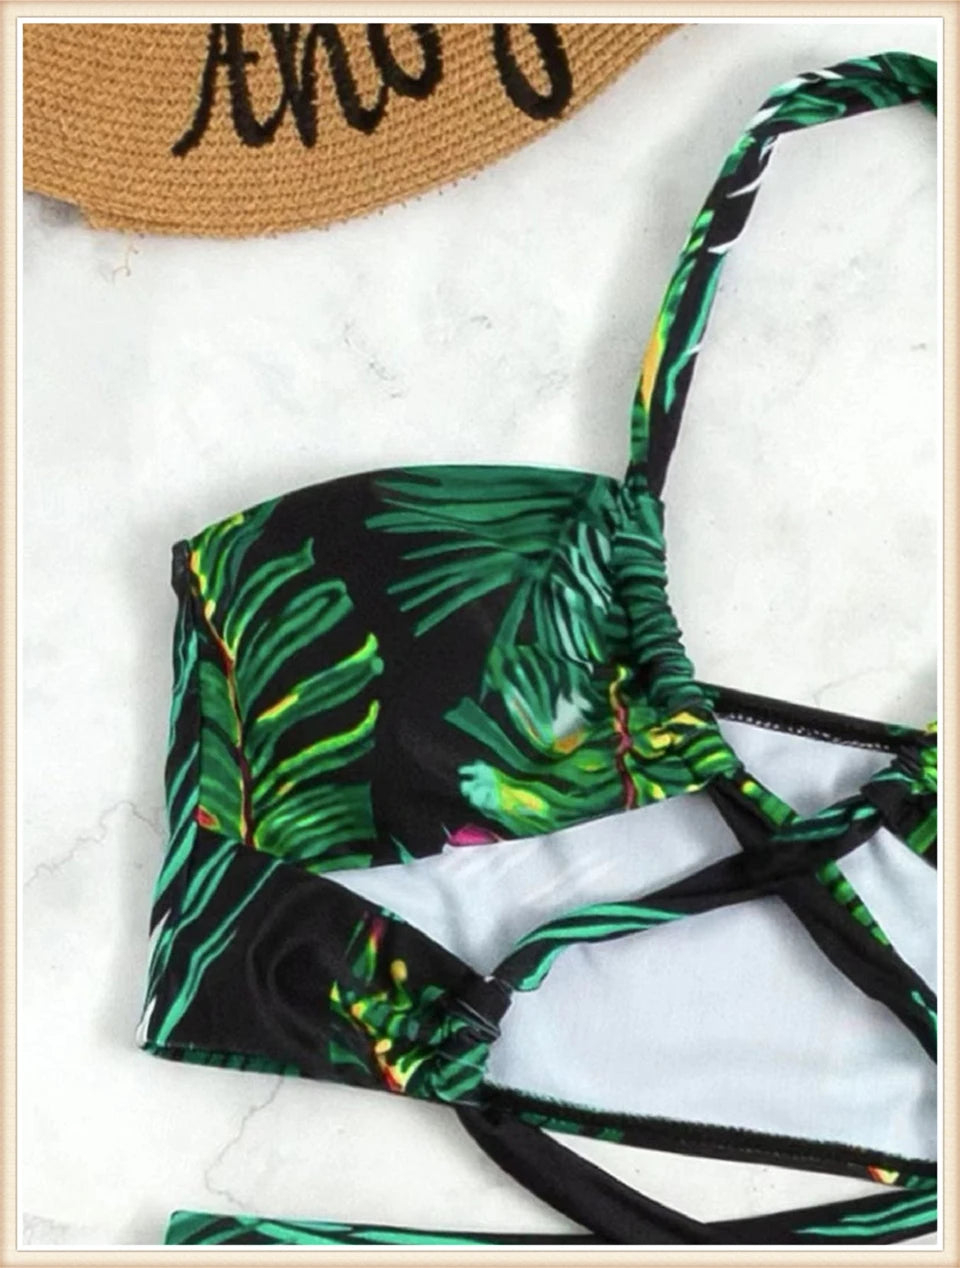 Bahamas Vacation 3 Piece Cover Up Skirt Set  Sunset and Swim   